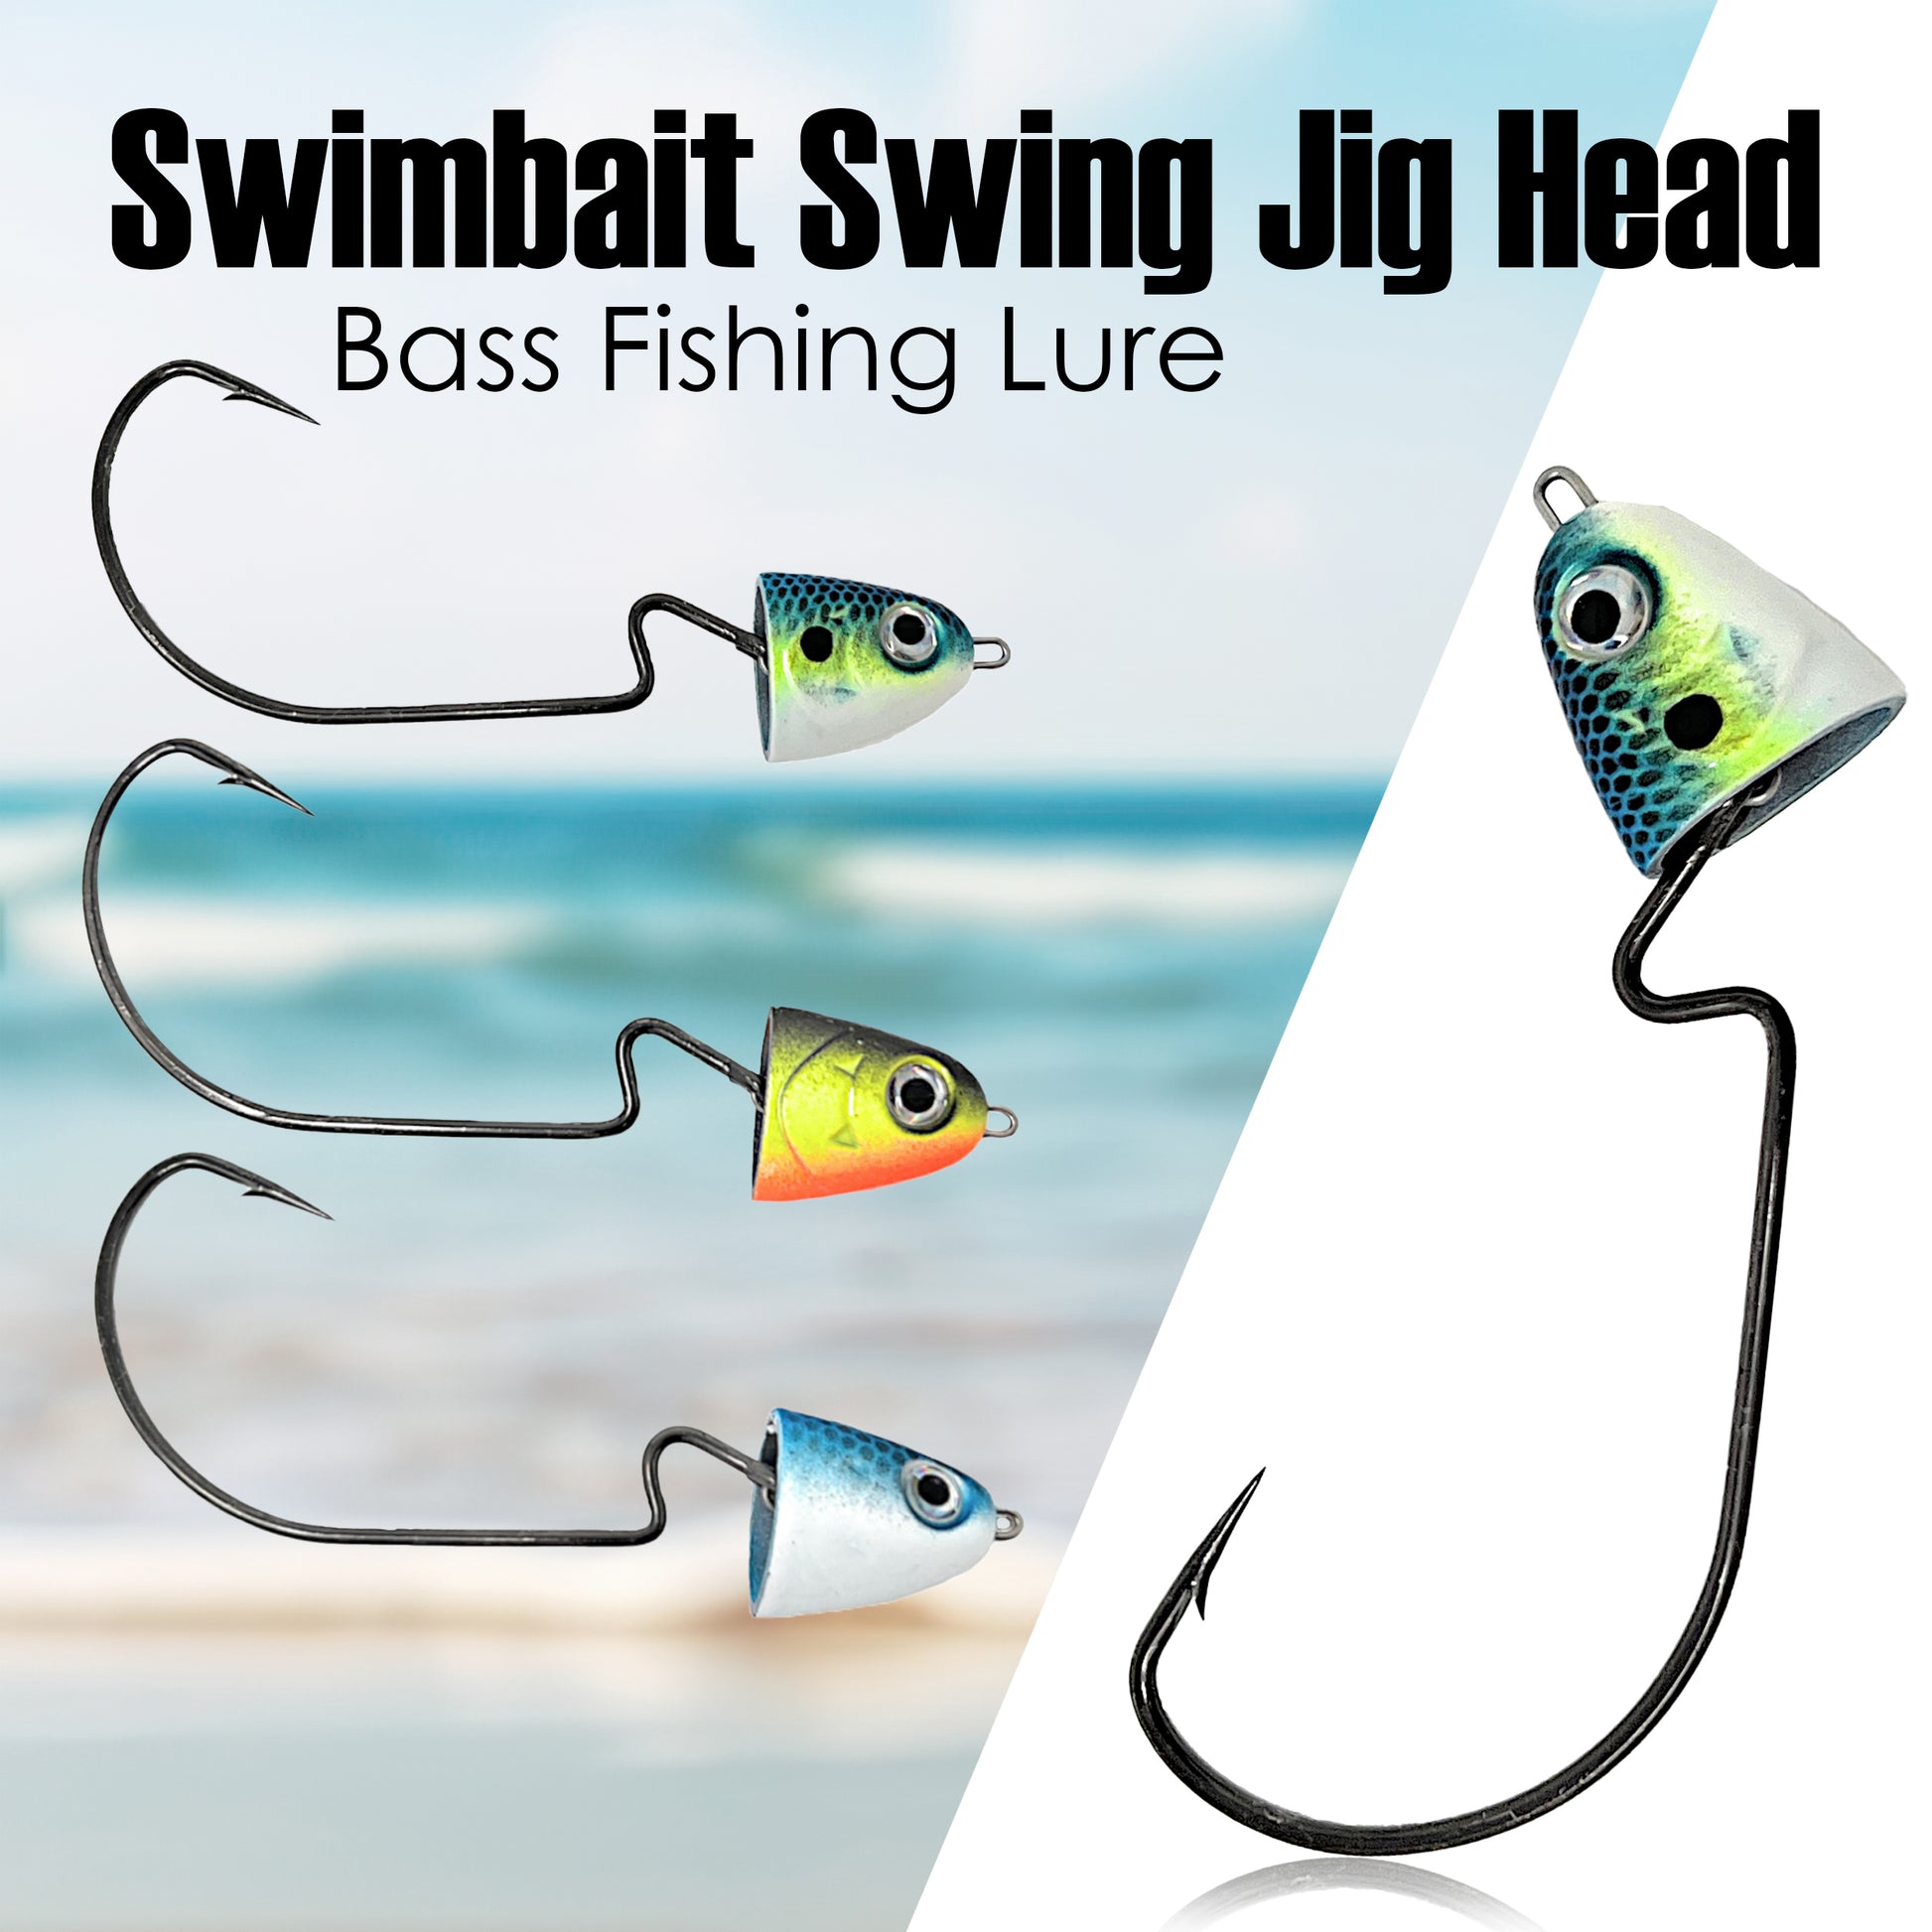 Reaction Tackle Tungsten Swim Jig for Bass Fishing - 1/2 oz Black